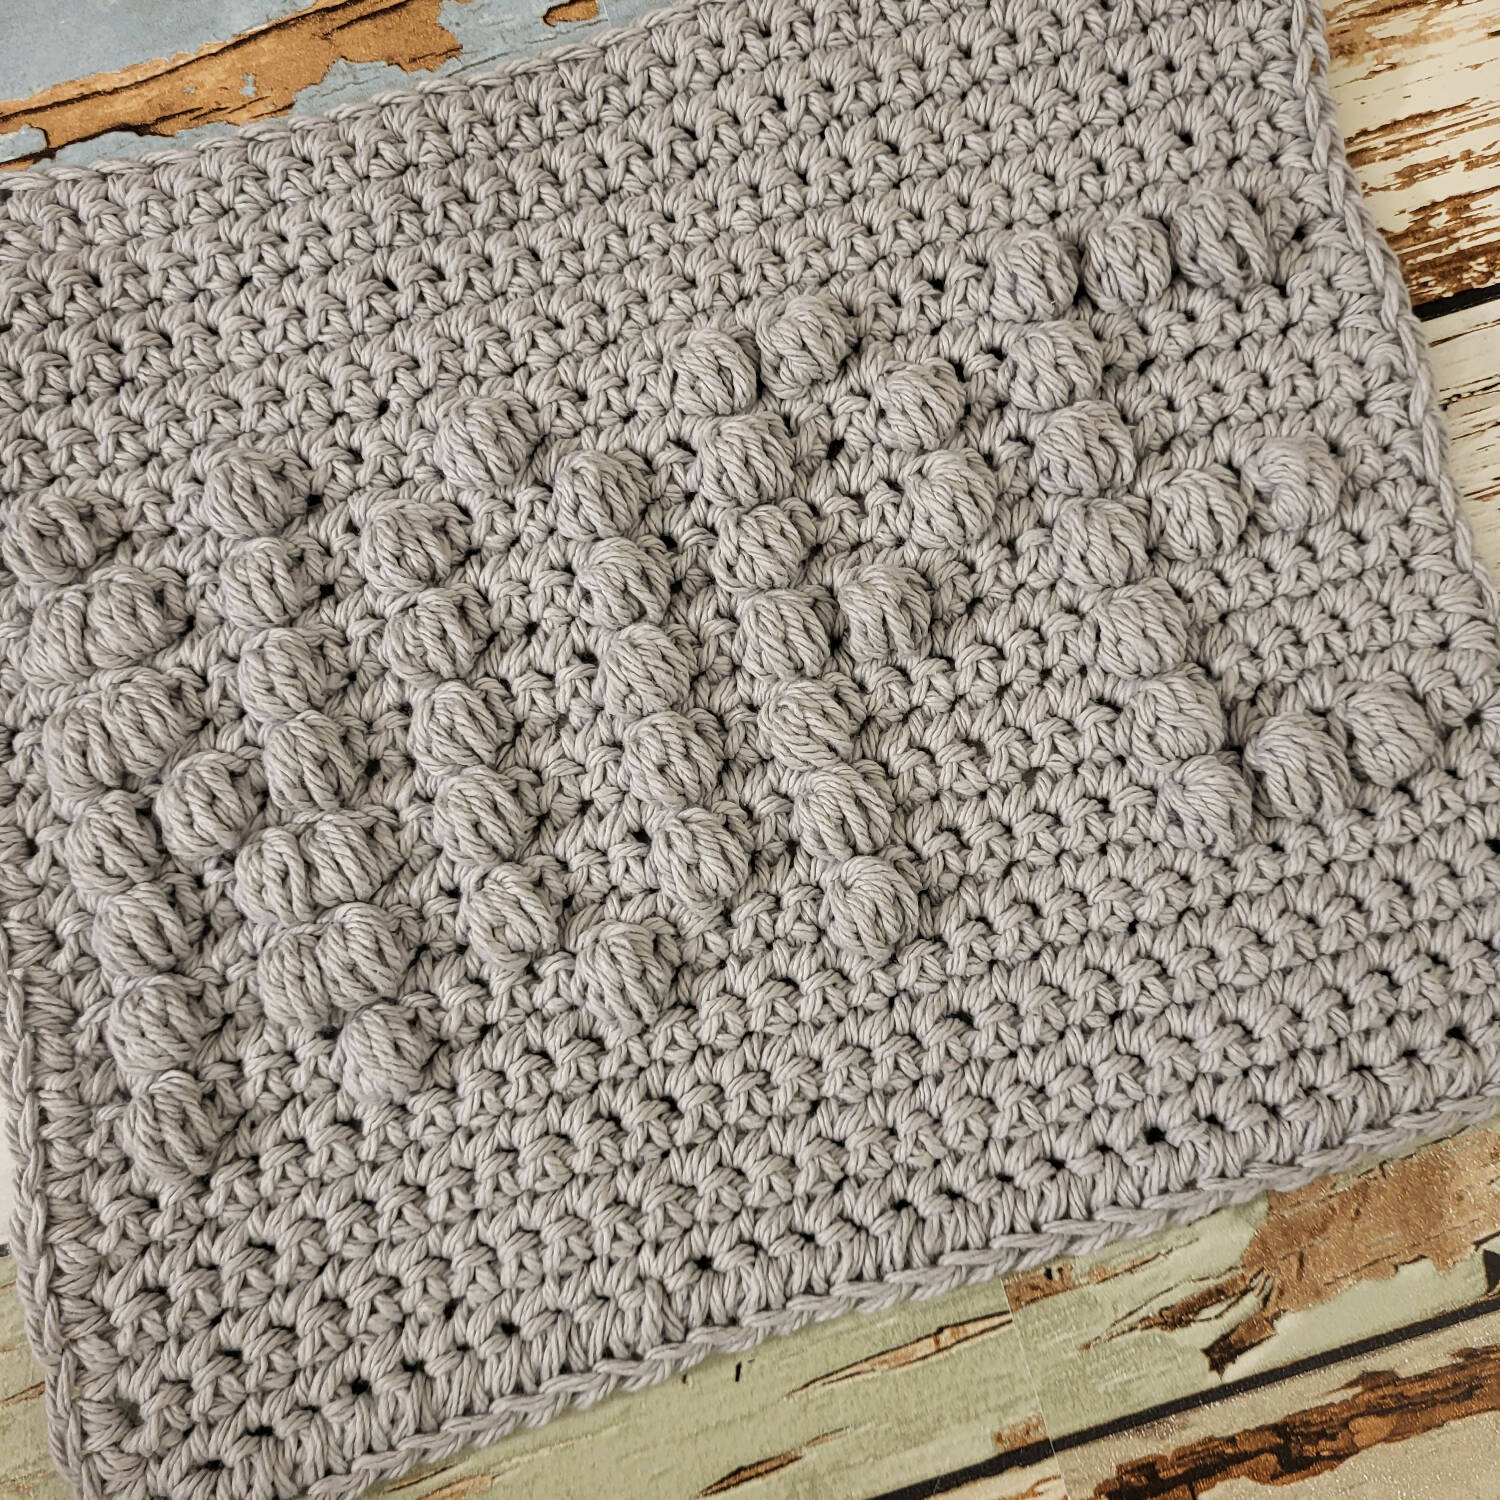 Sassy Crochet Cloth NOPE